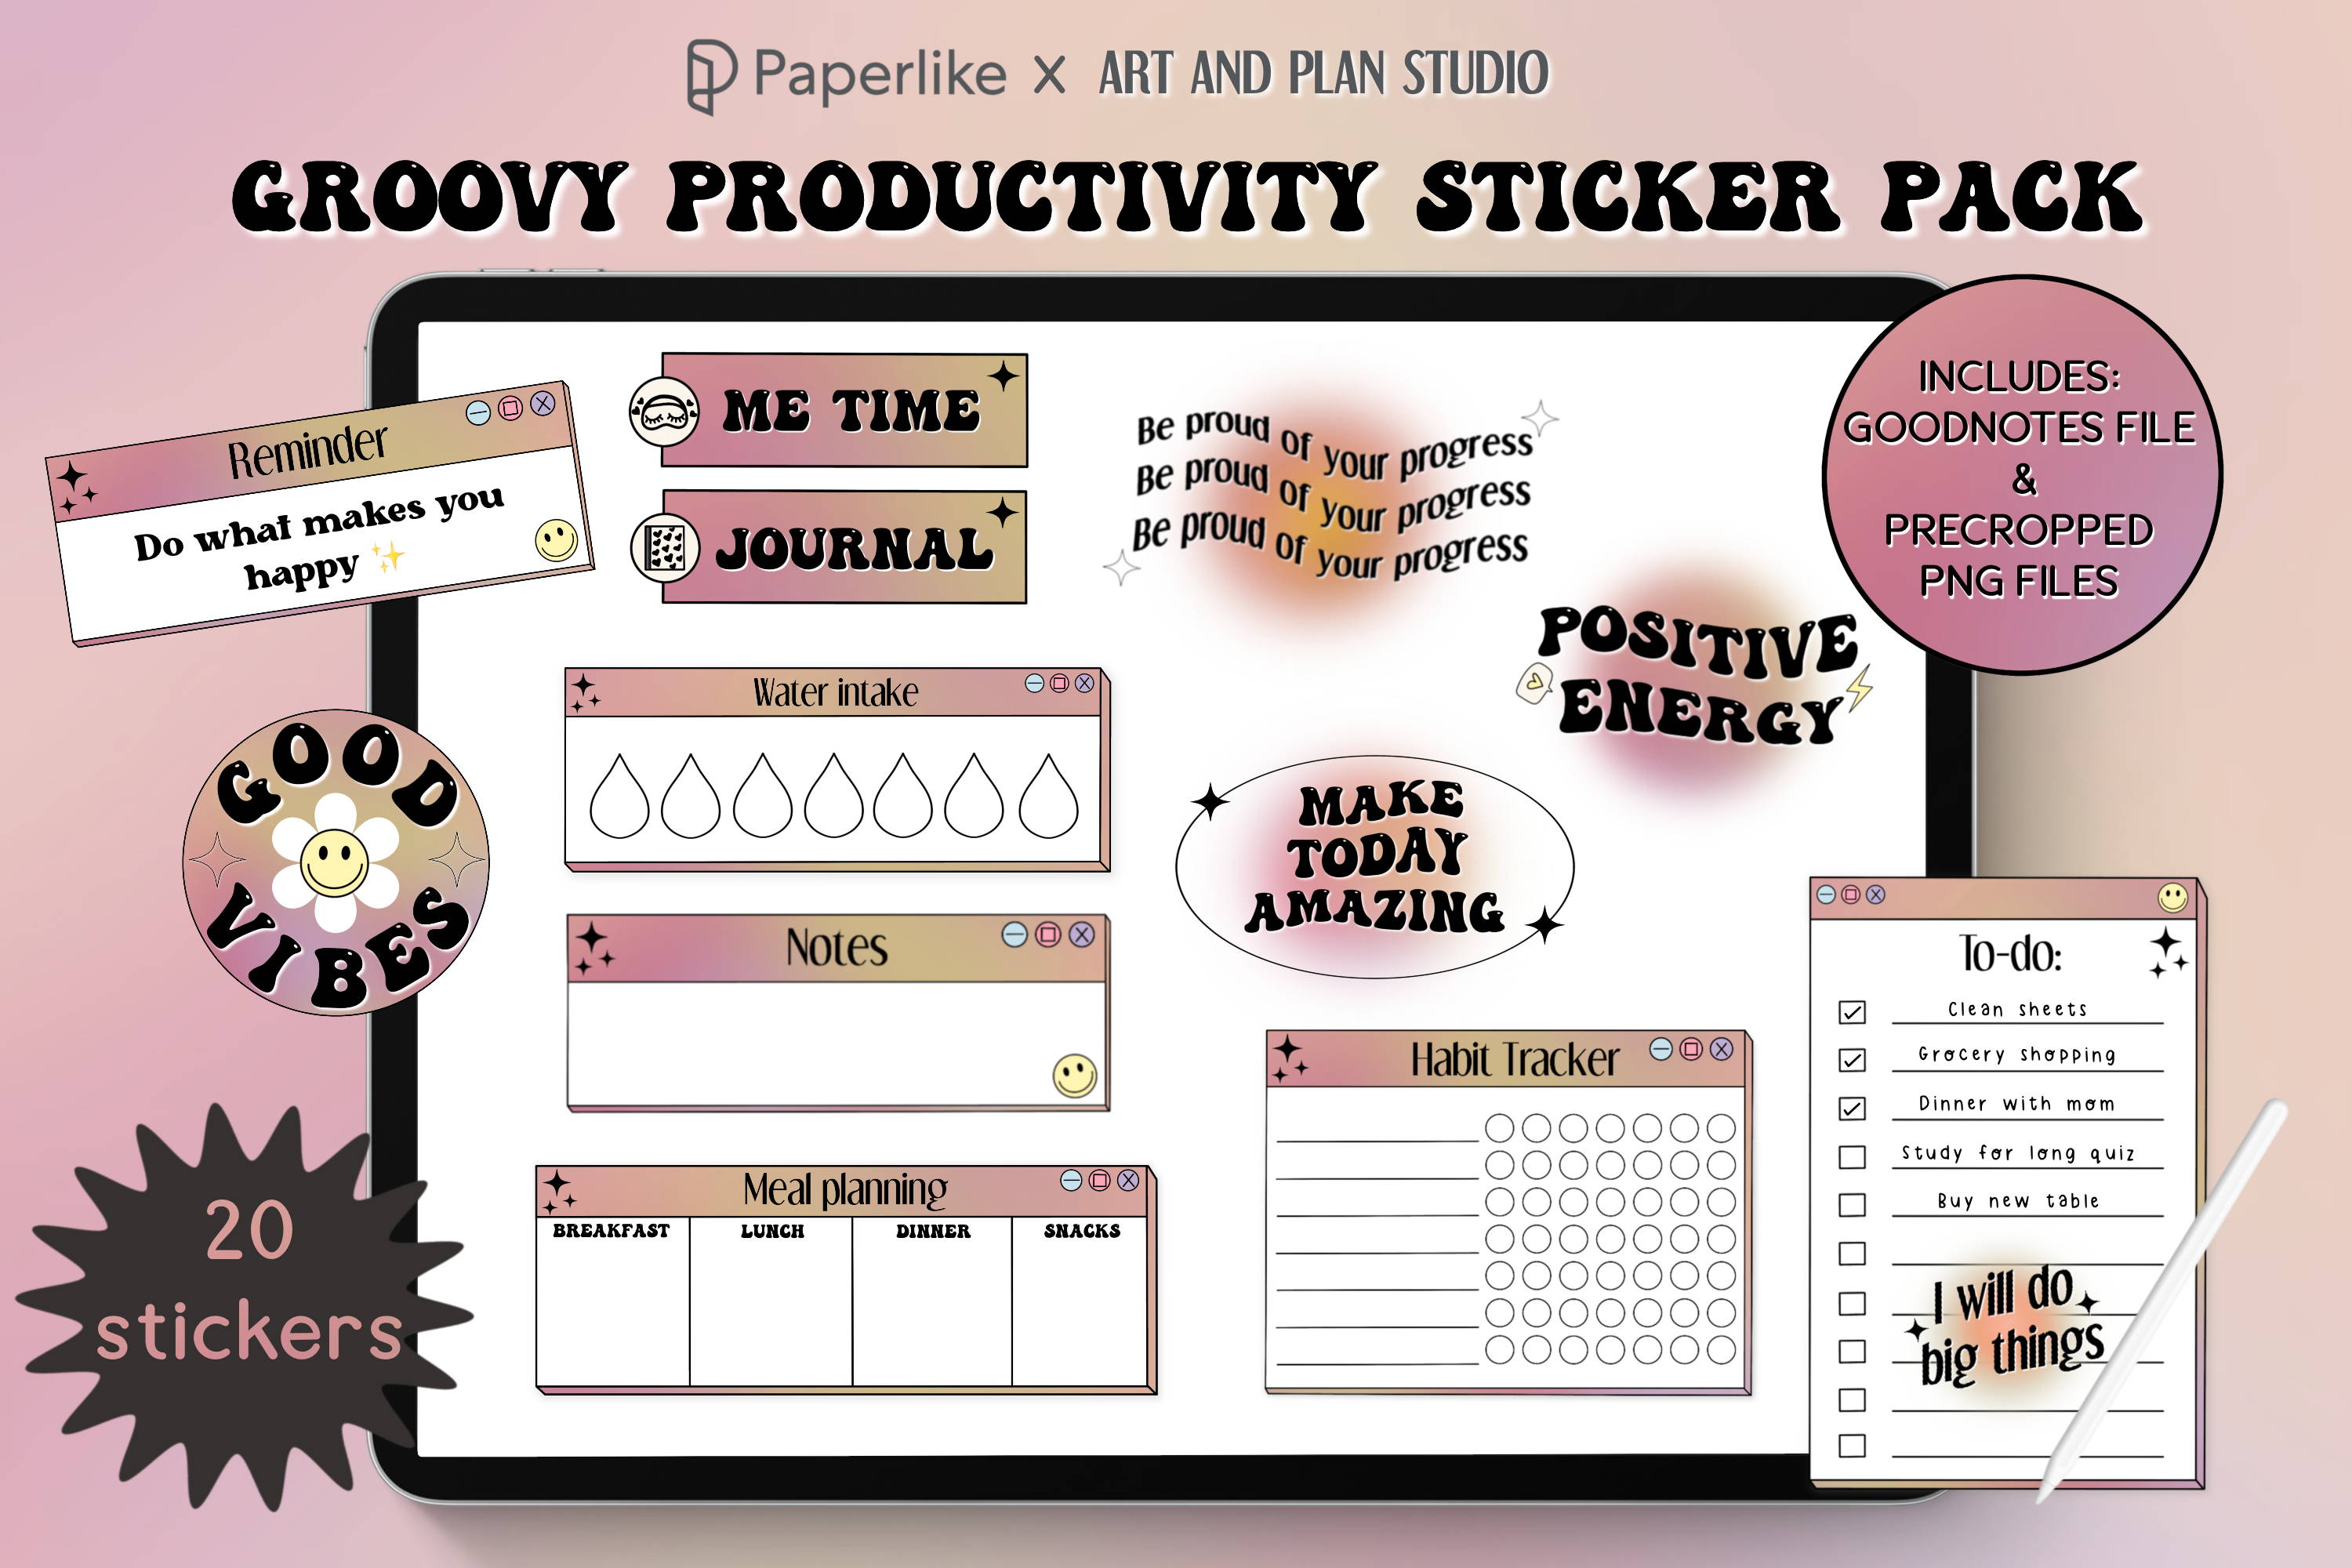 Groovy Productivity Sticker Pack [Paperlike X Art And Plan Studio]